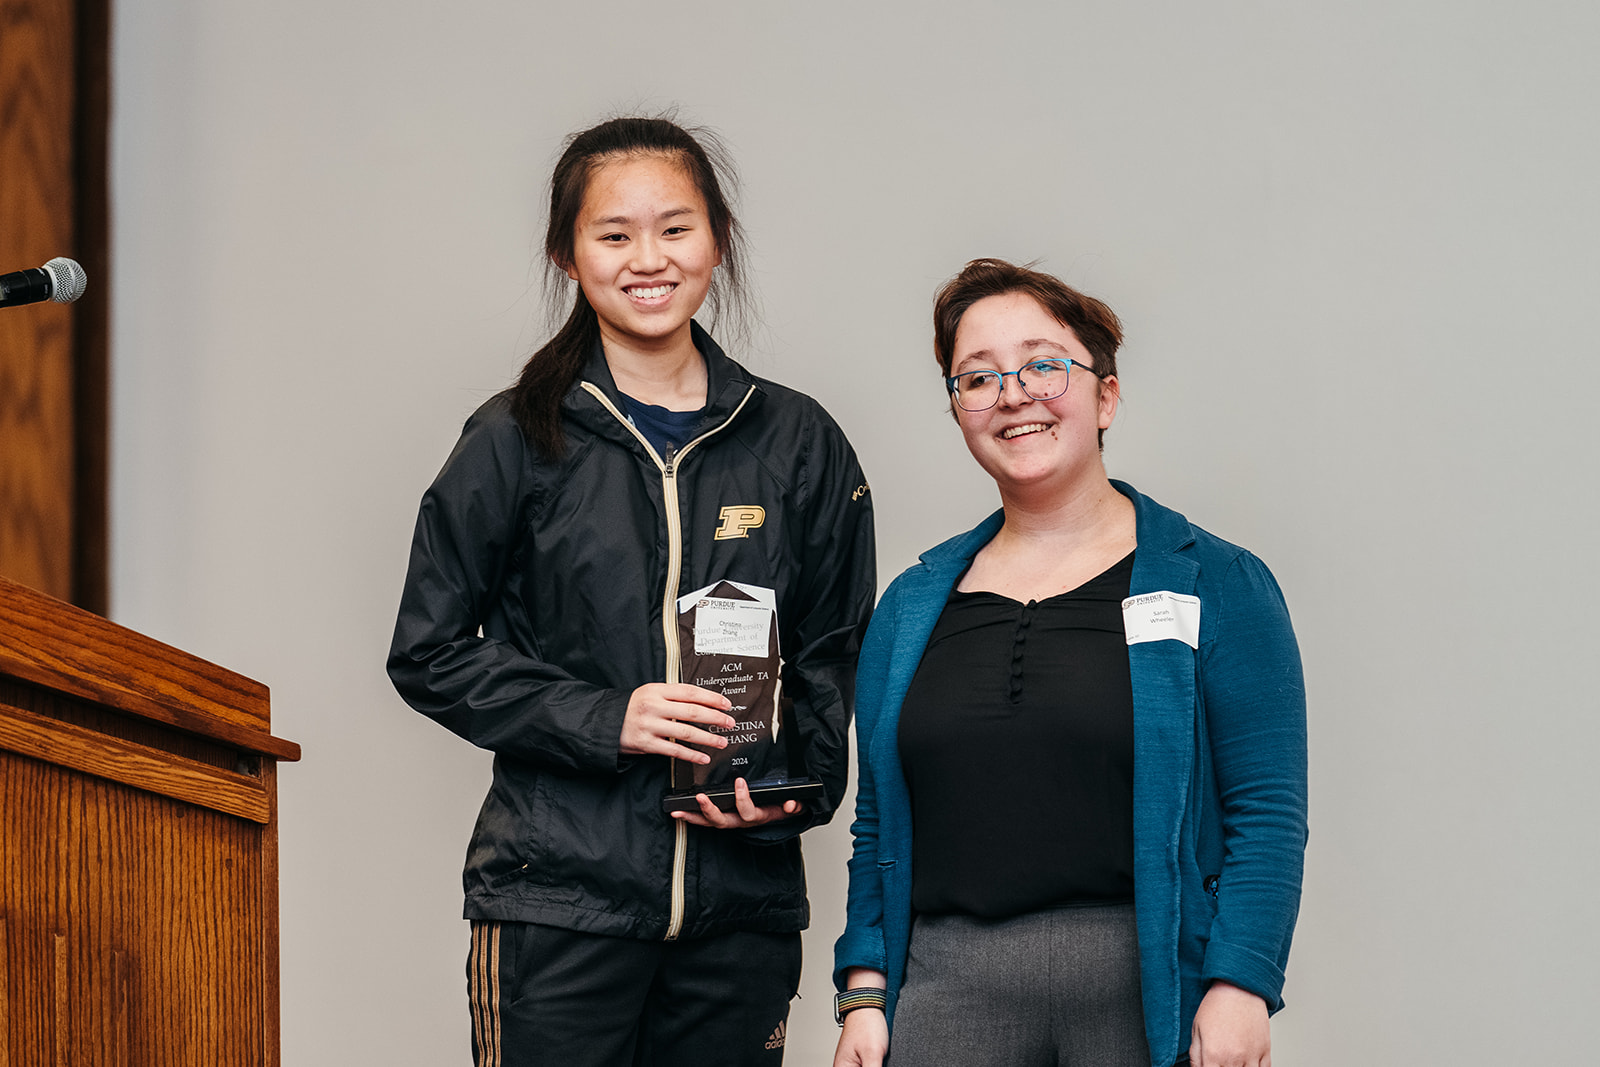 Christina Zhang won the ACM Undergraduate Teaching Assistant Award